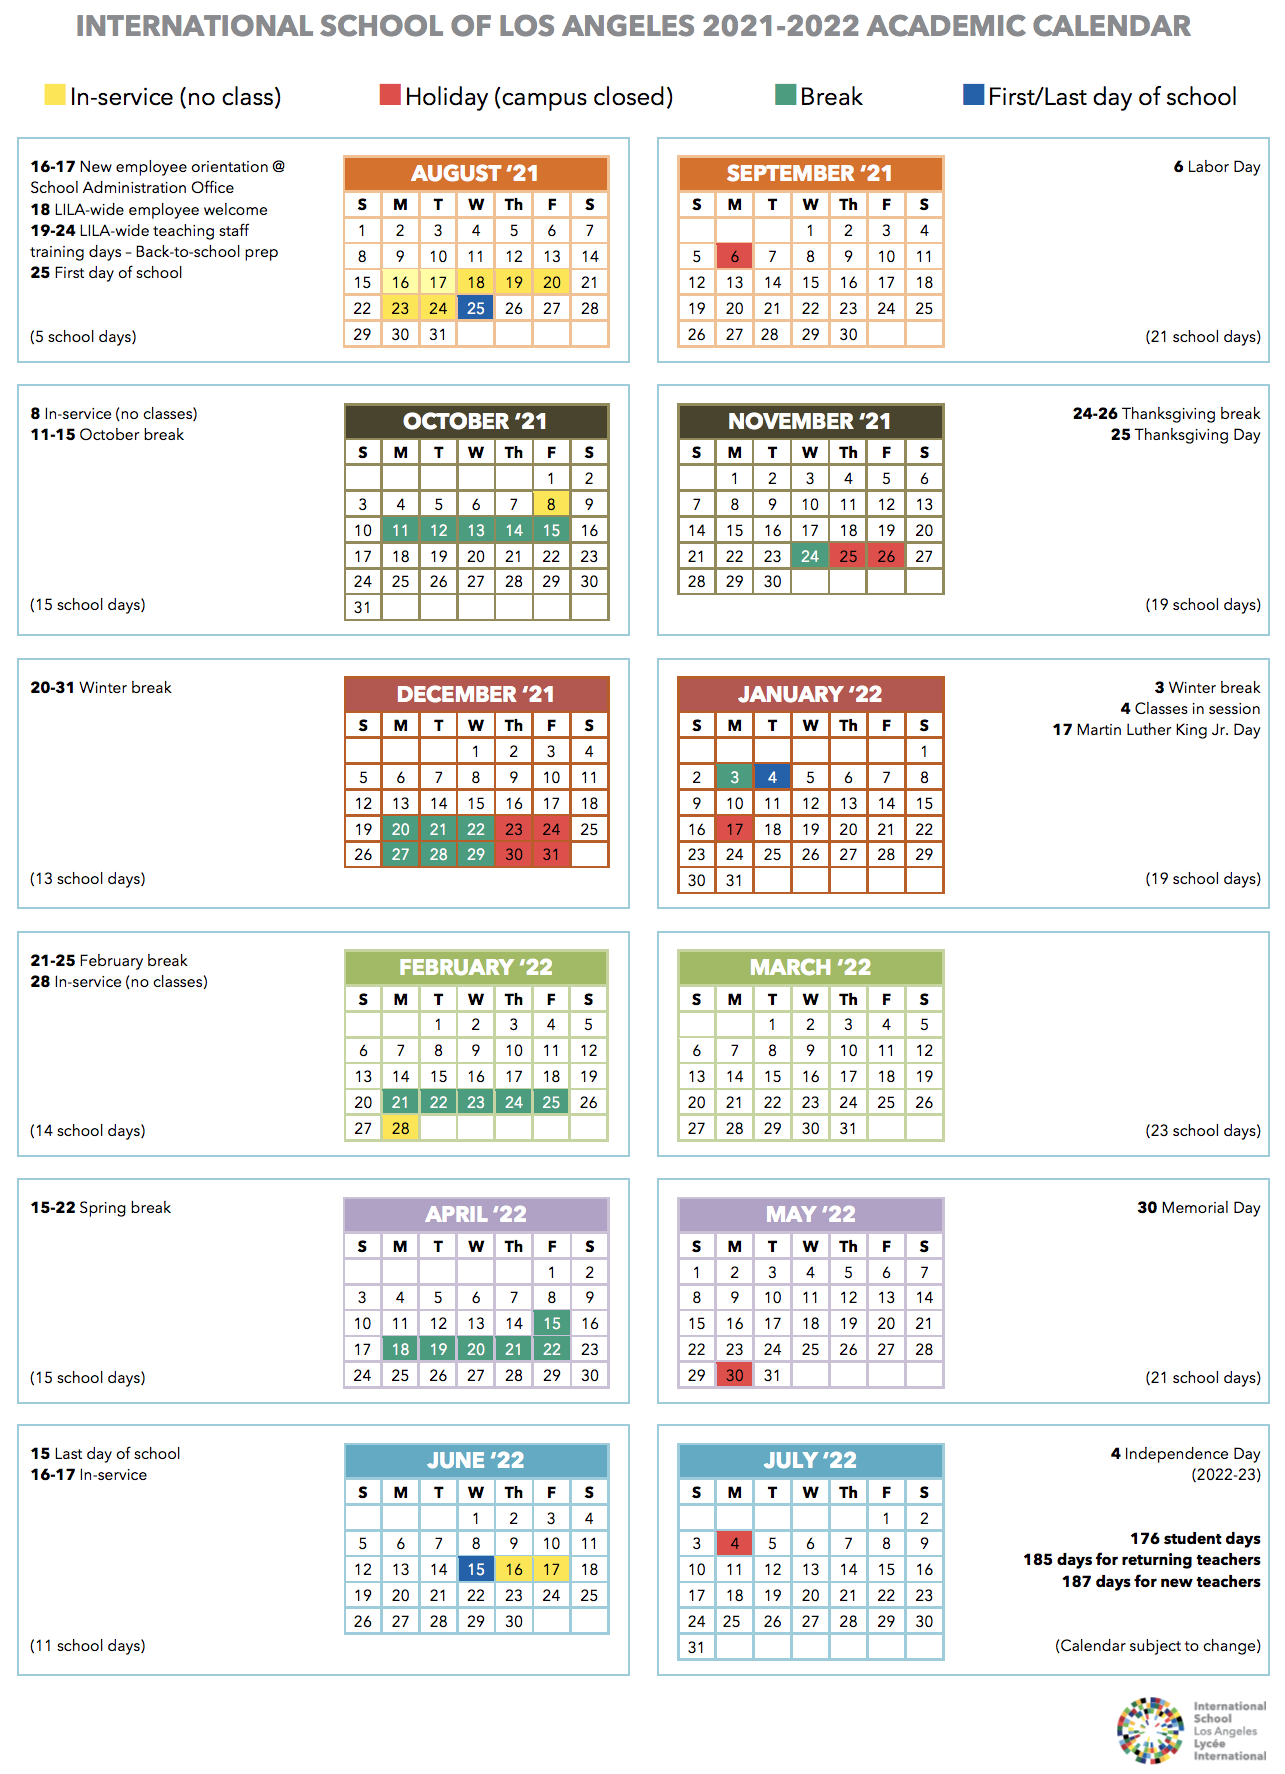 Csula Spring 2022 Calendar Calendar | International School Of Los Angeles